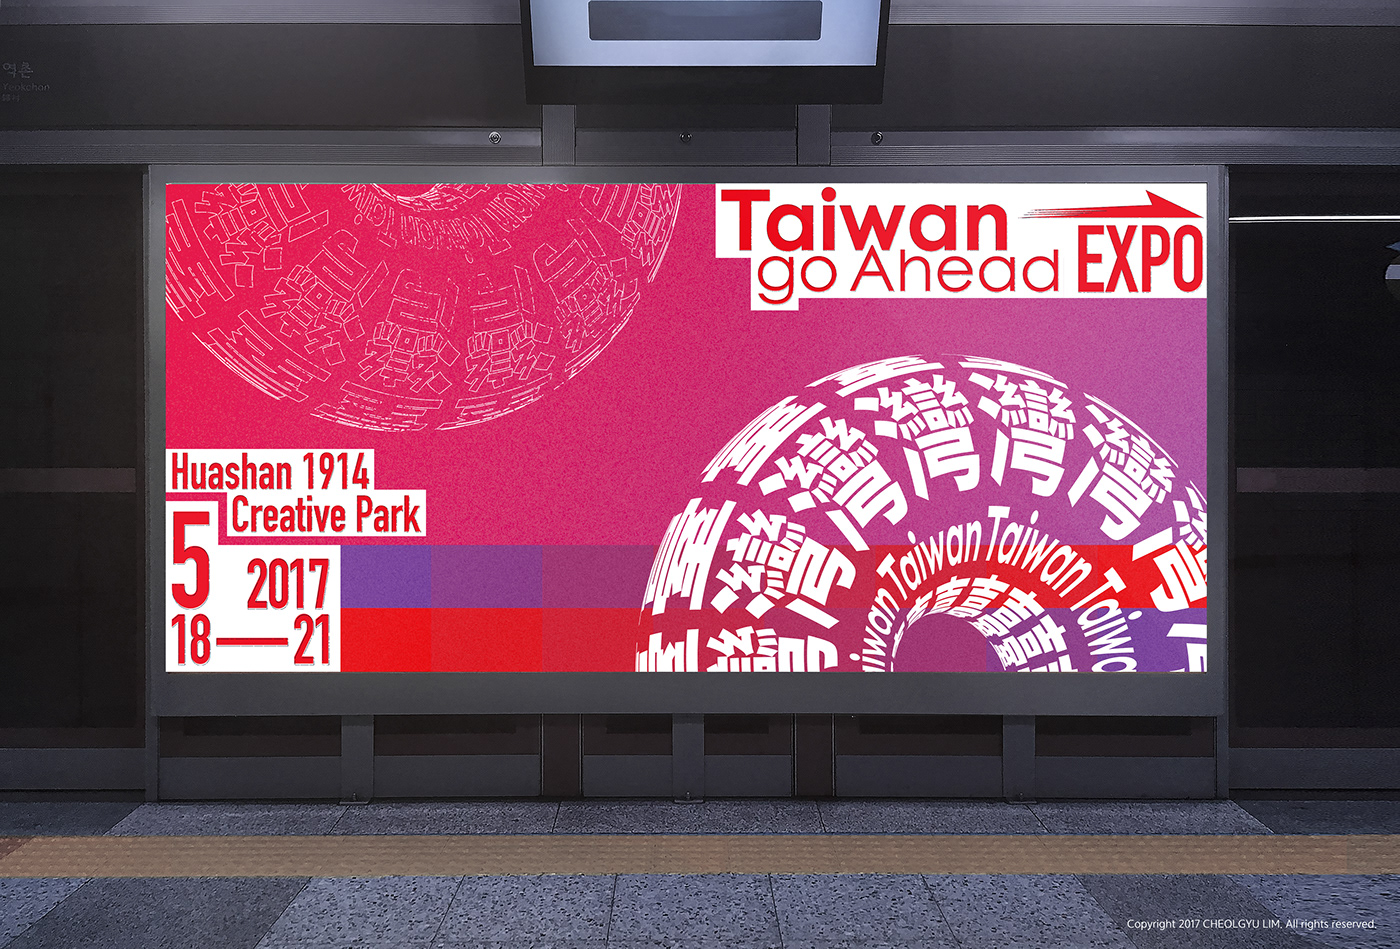 taiwan expo Exhibition  go ahead